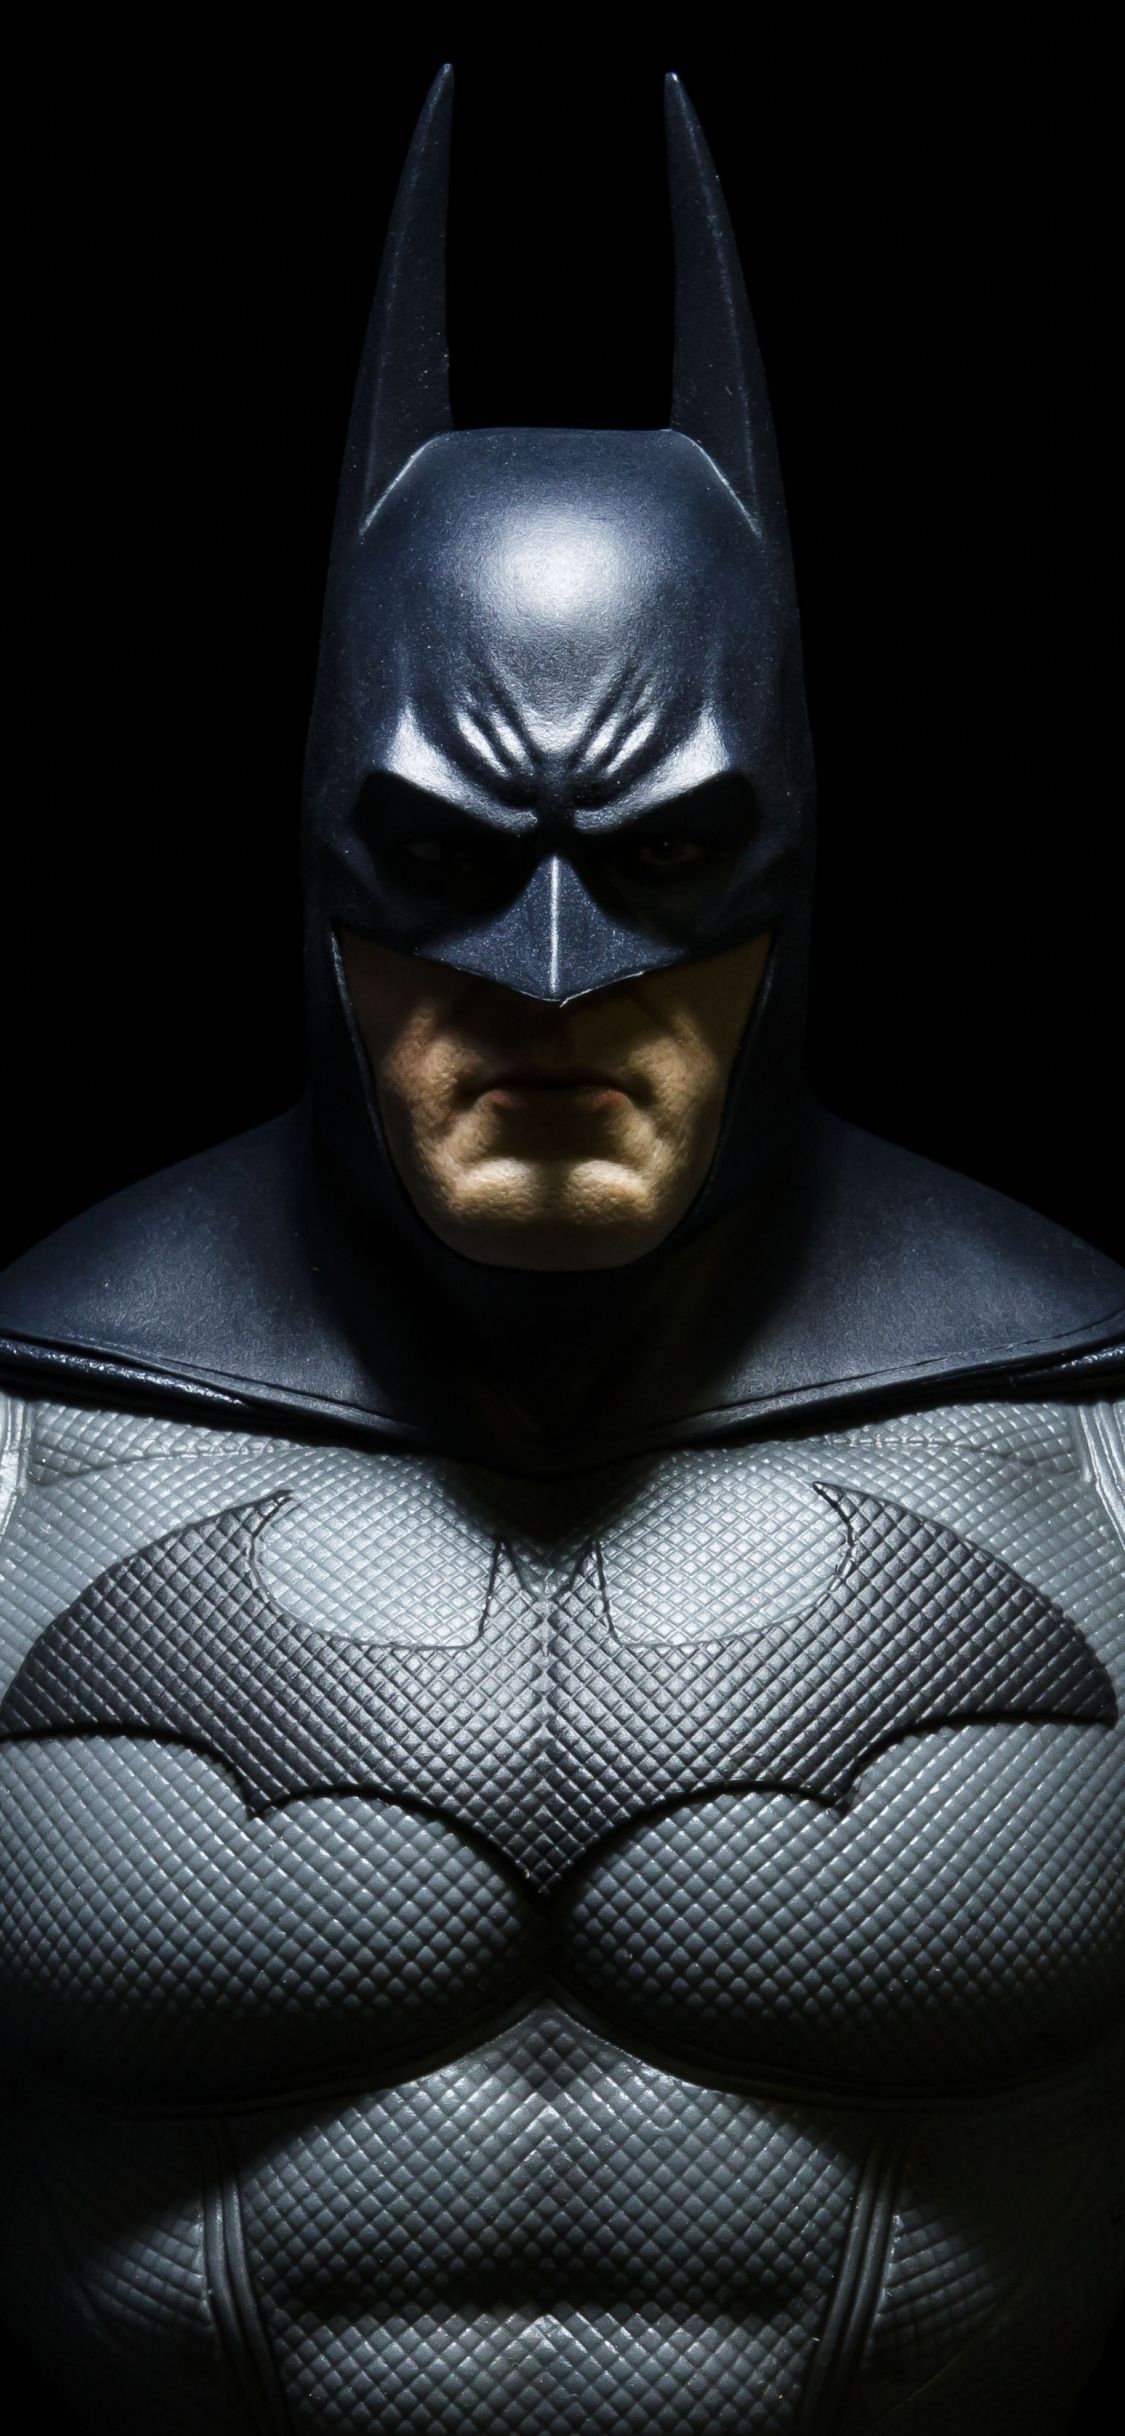 Batman, superhero, 3D, art wallpaper, 5430x HD image, picture, 10da18e6